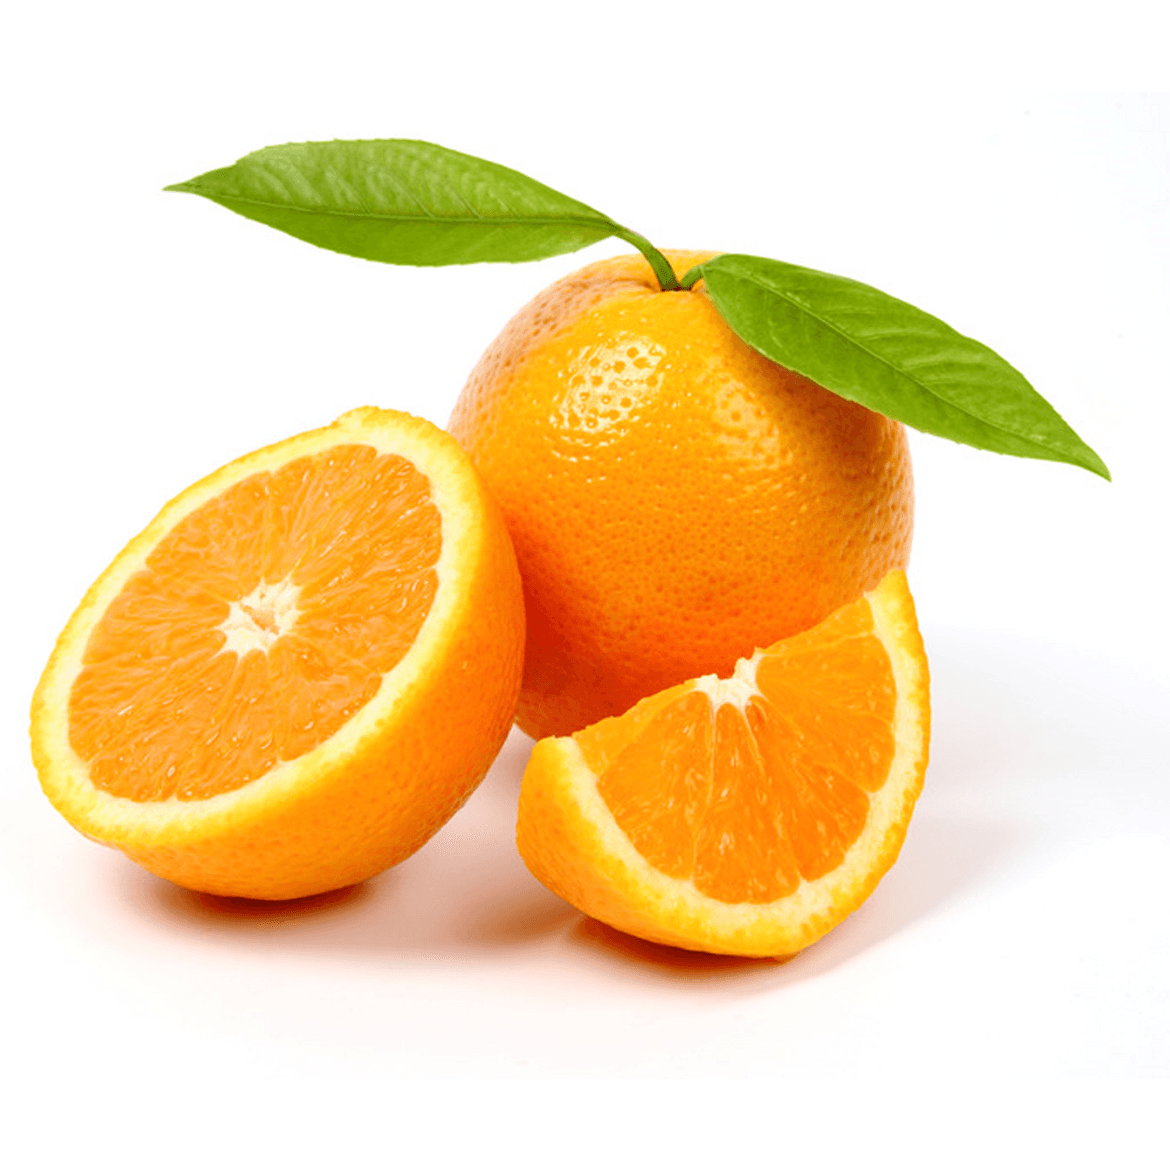 Narancs lédig